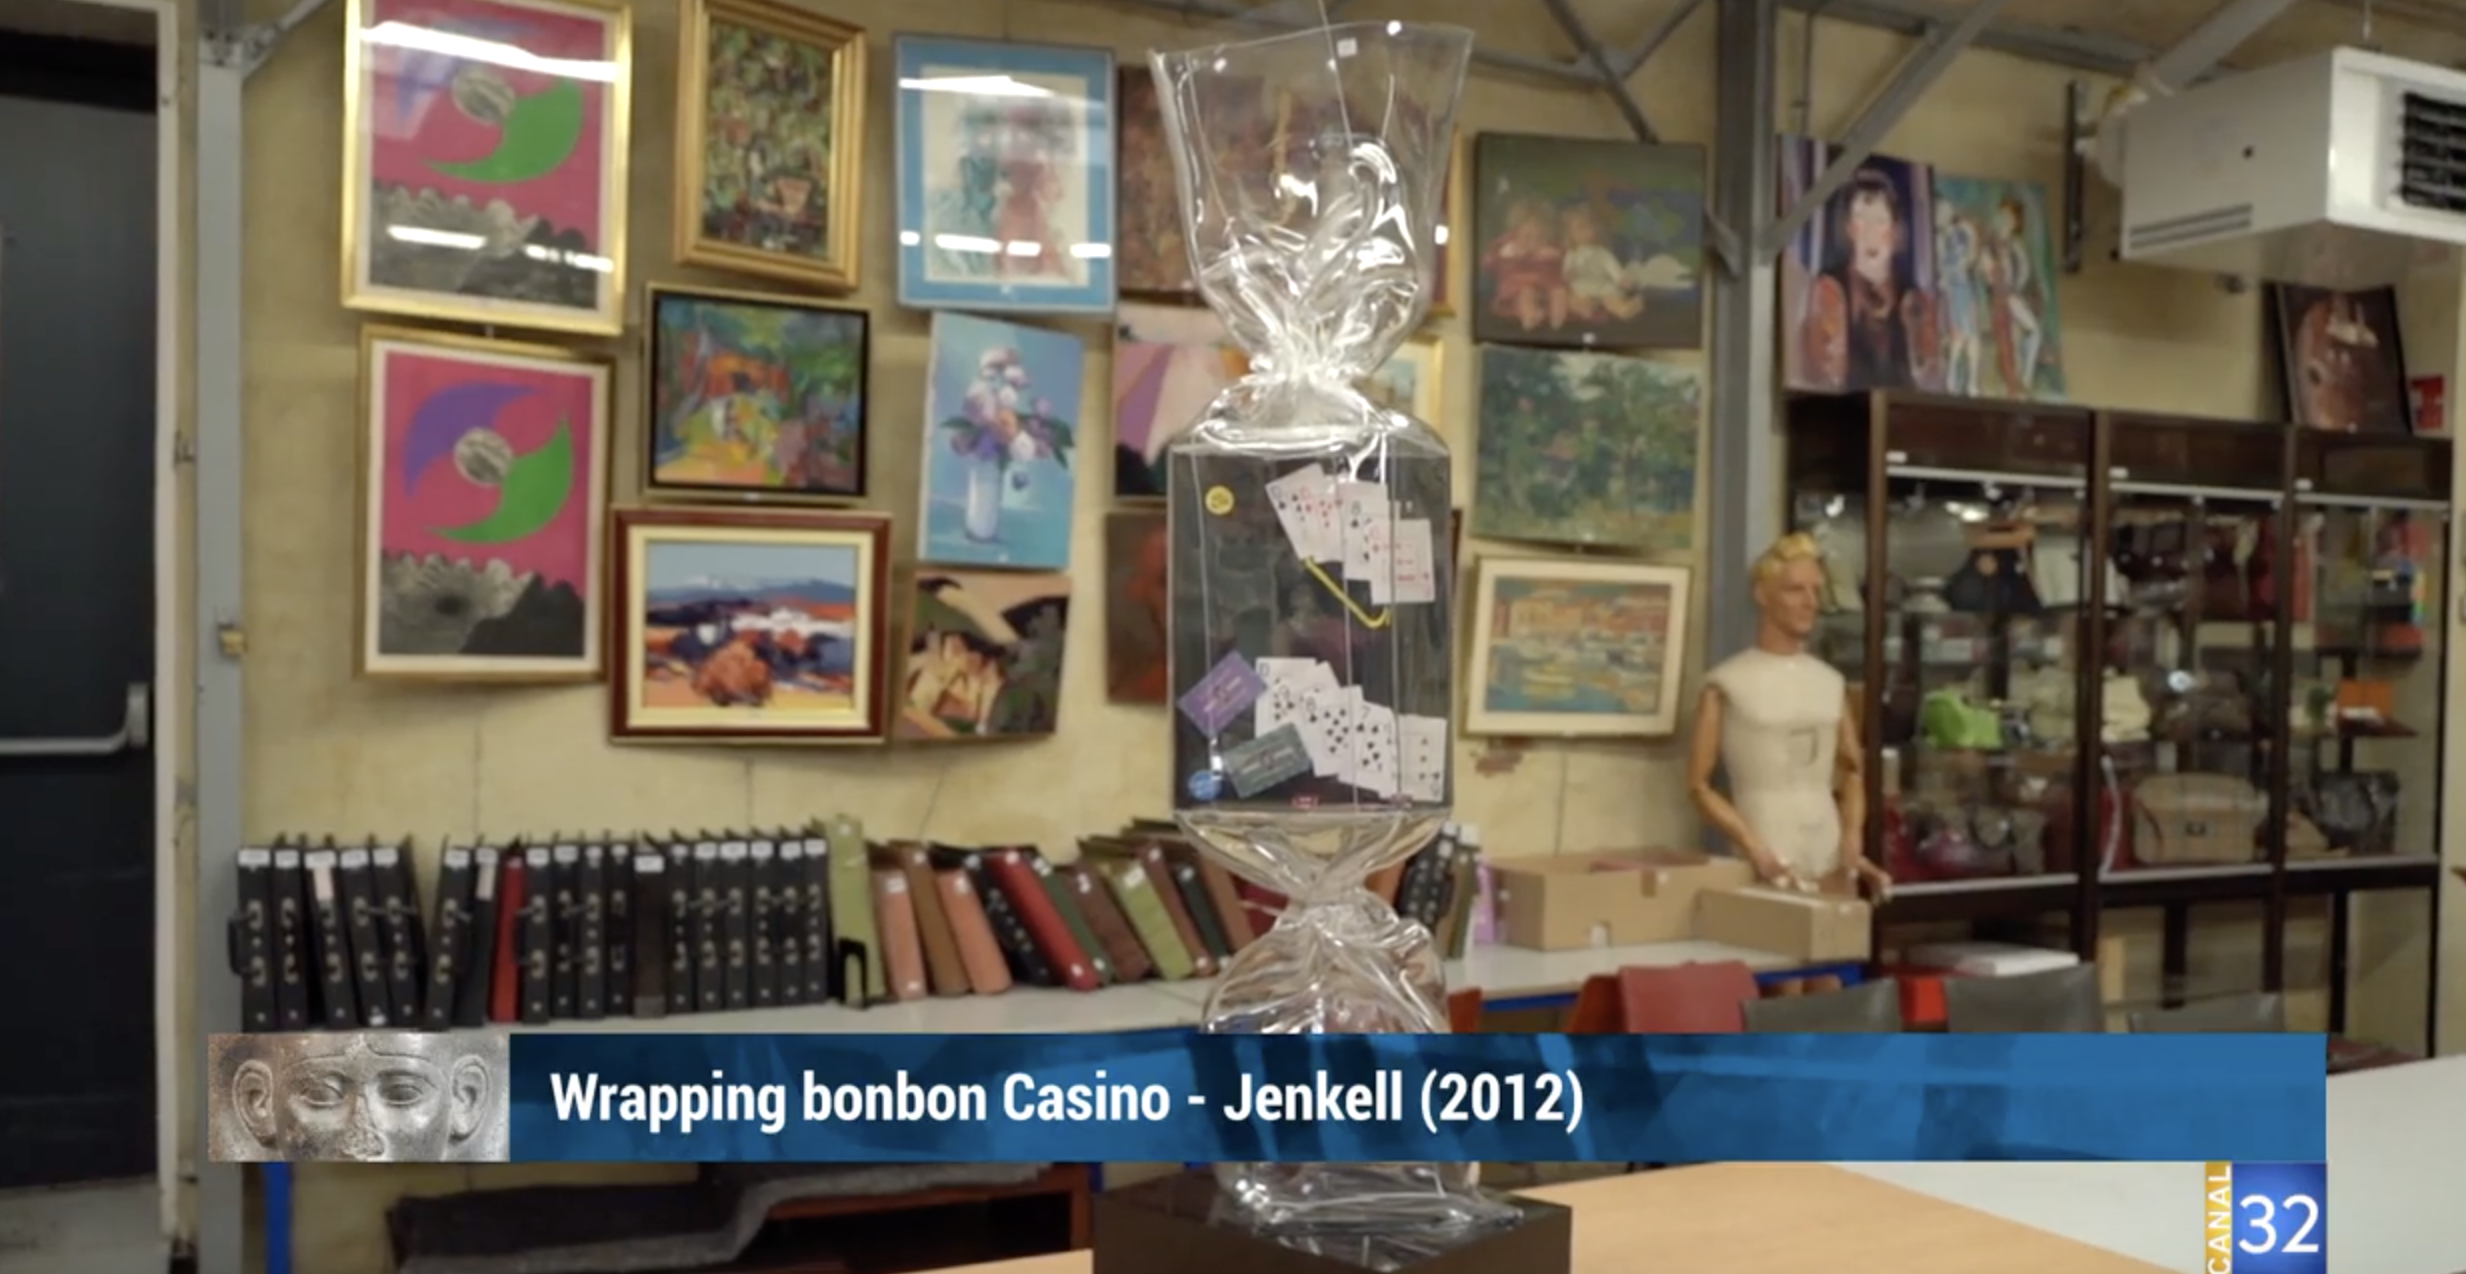 Wrapping Bonbon Casino, Laurence Jenkell